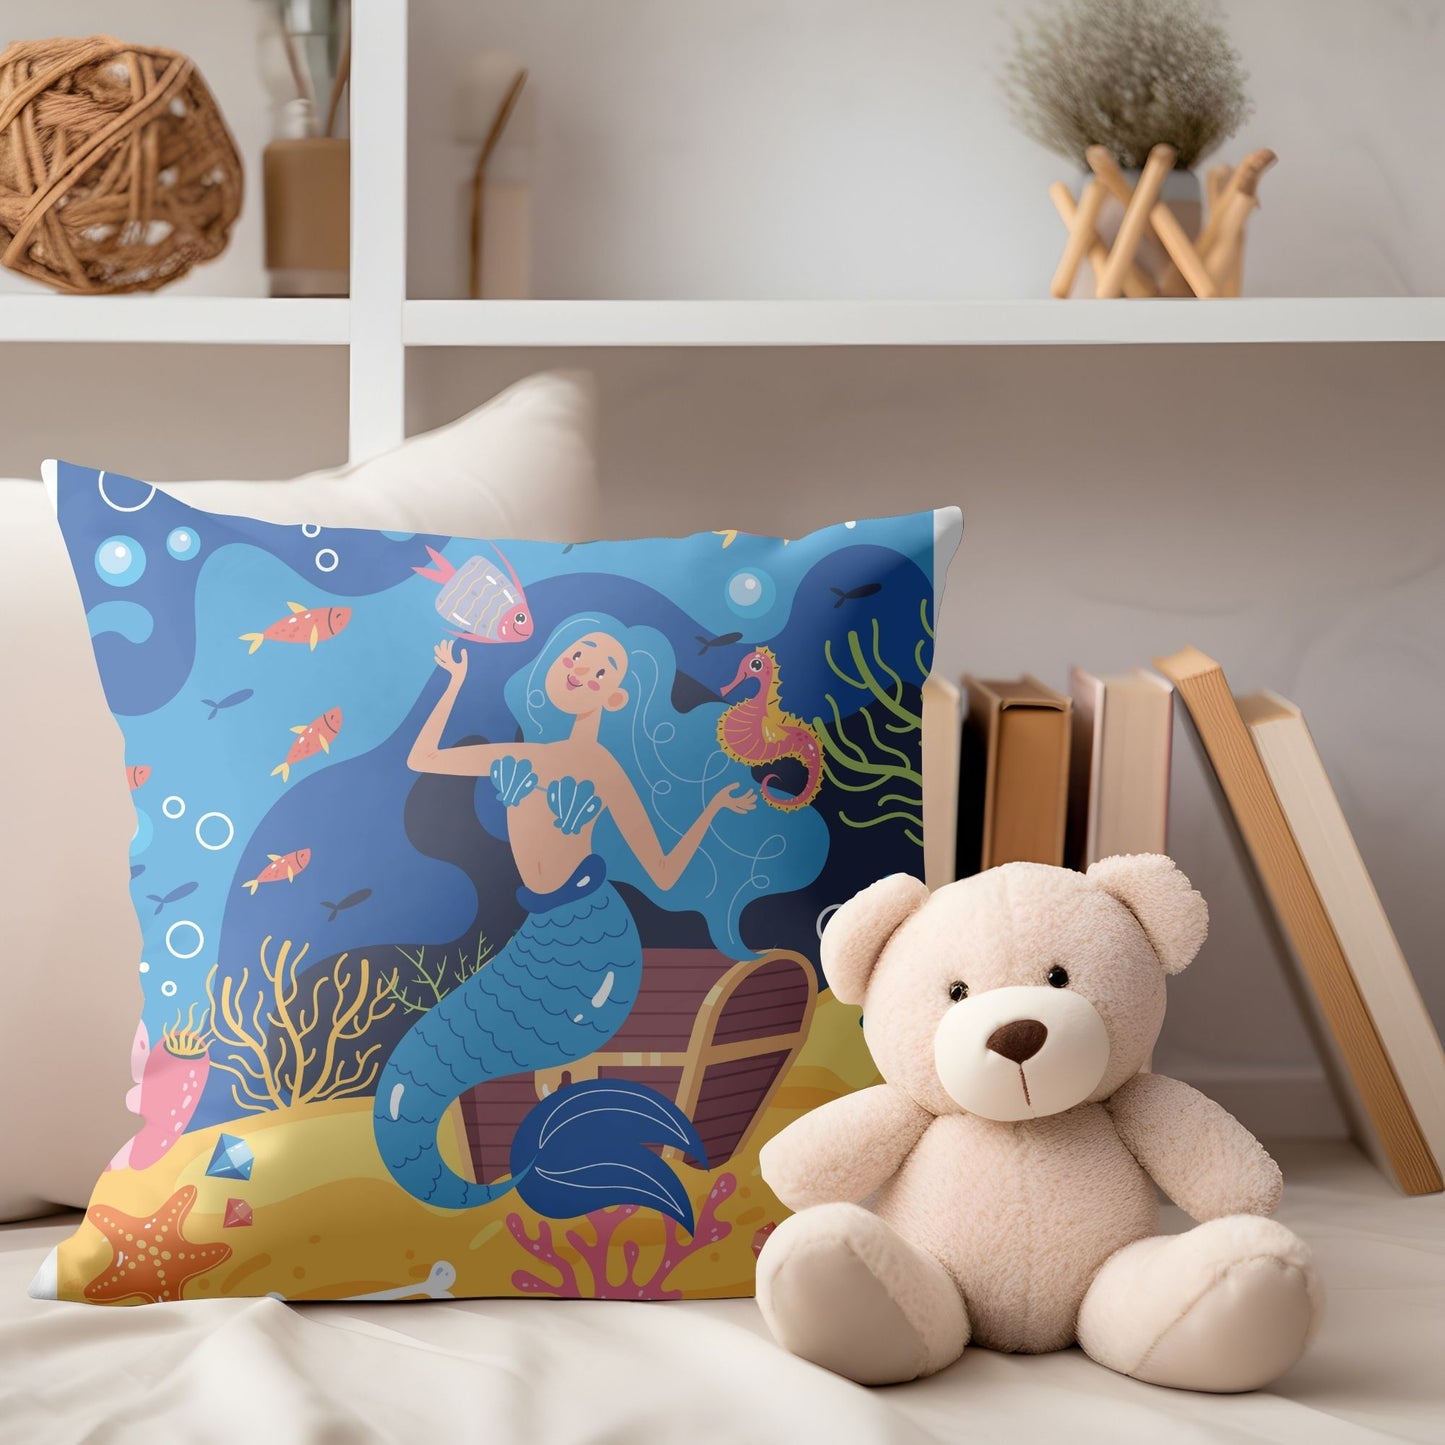 Cozy mermaid-themed pillow for girls' bedroom decor.